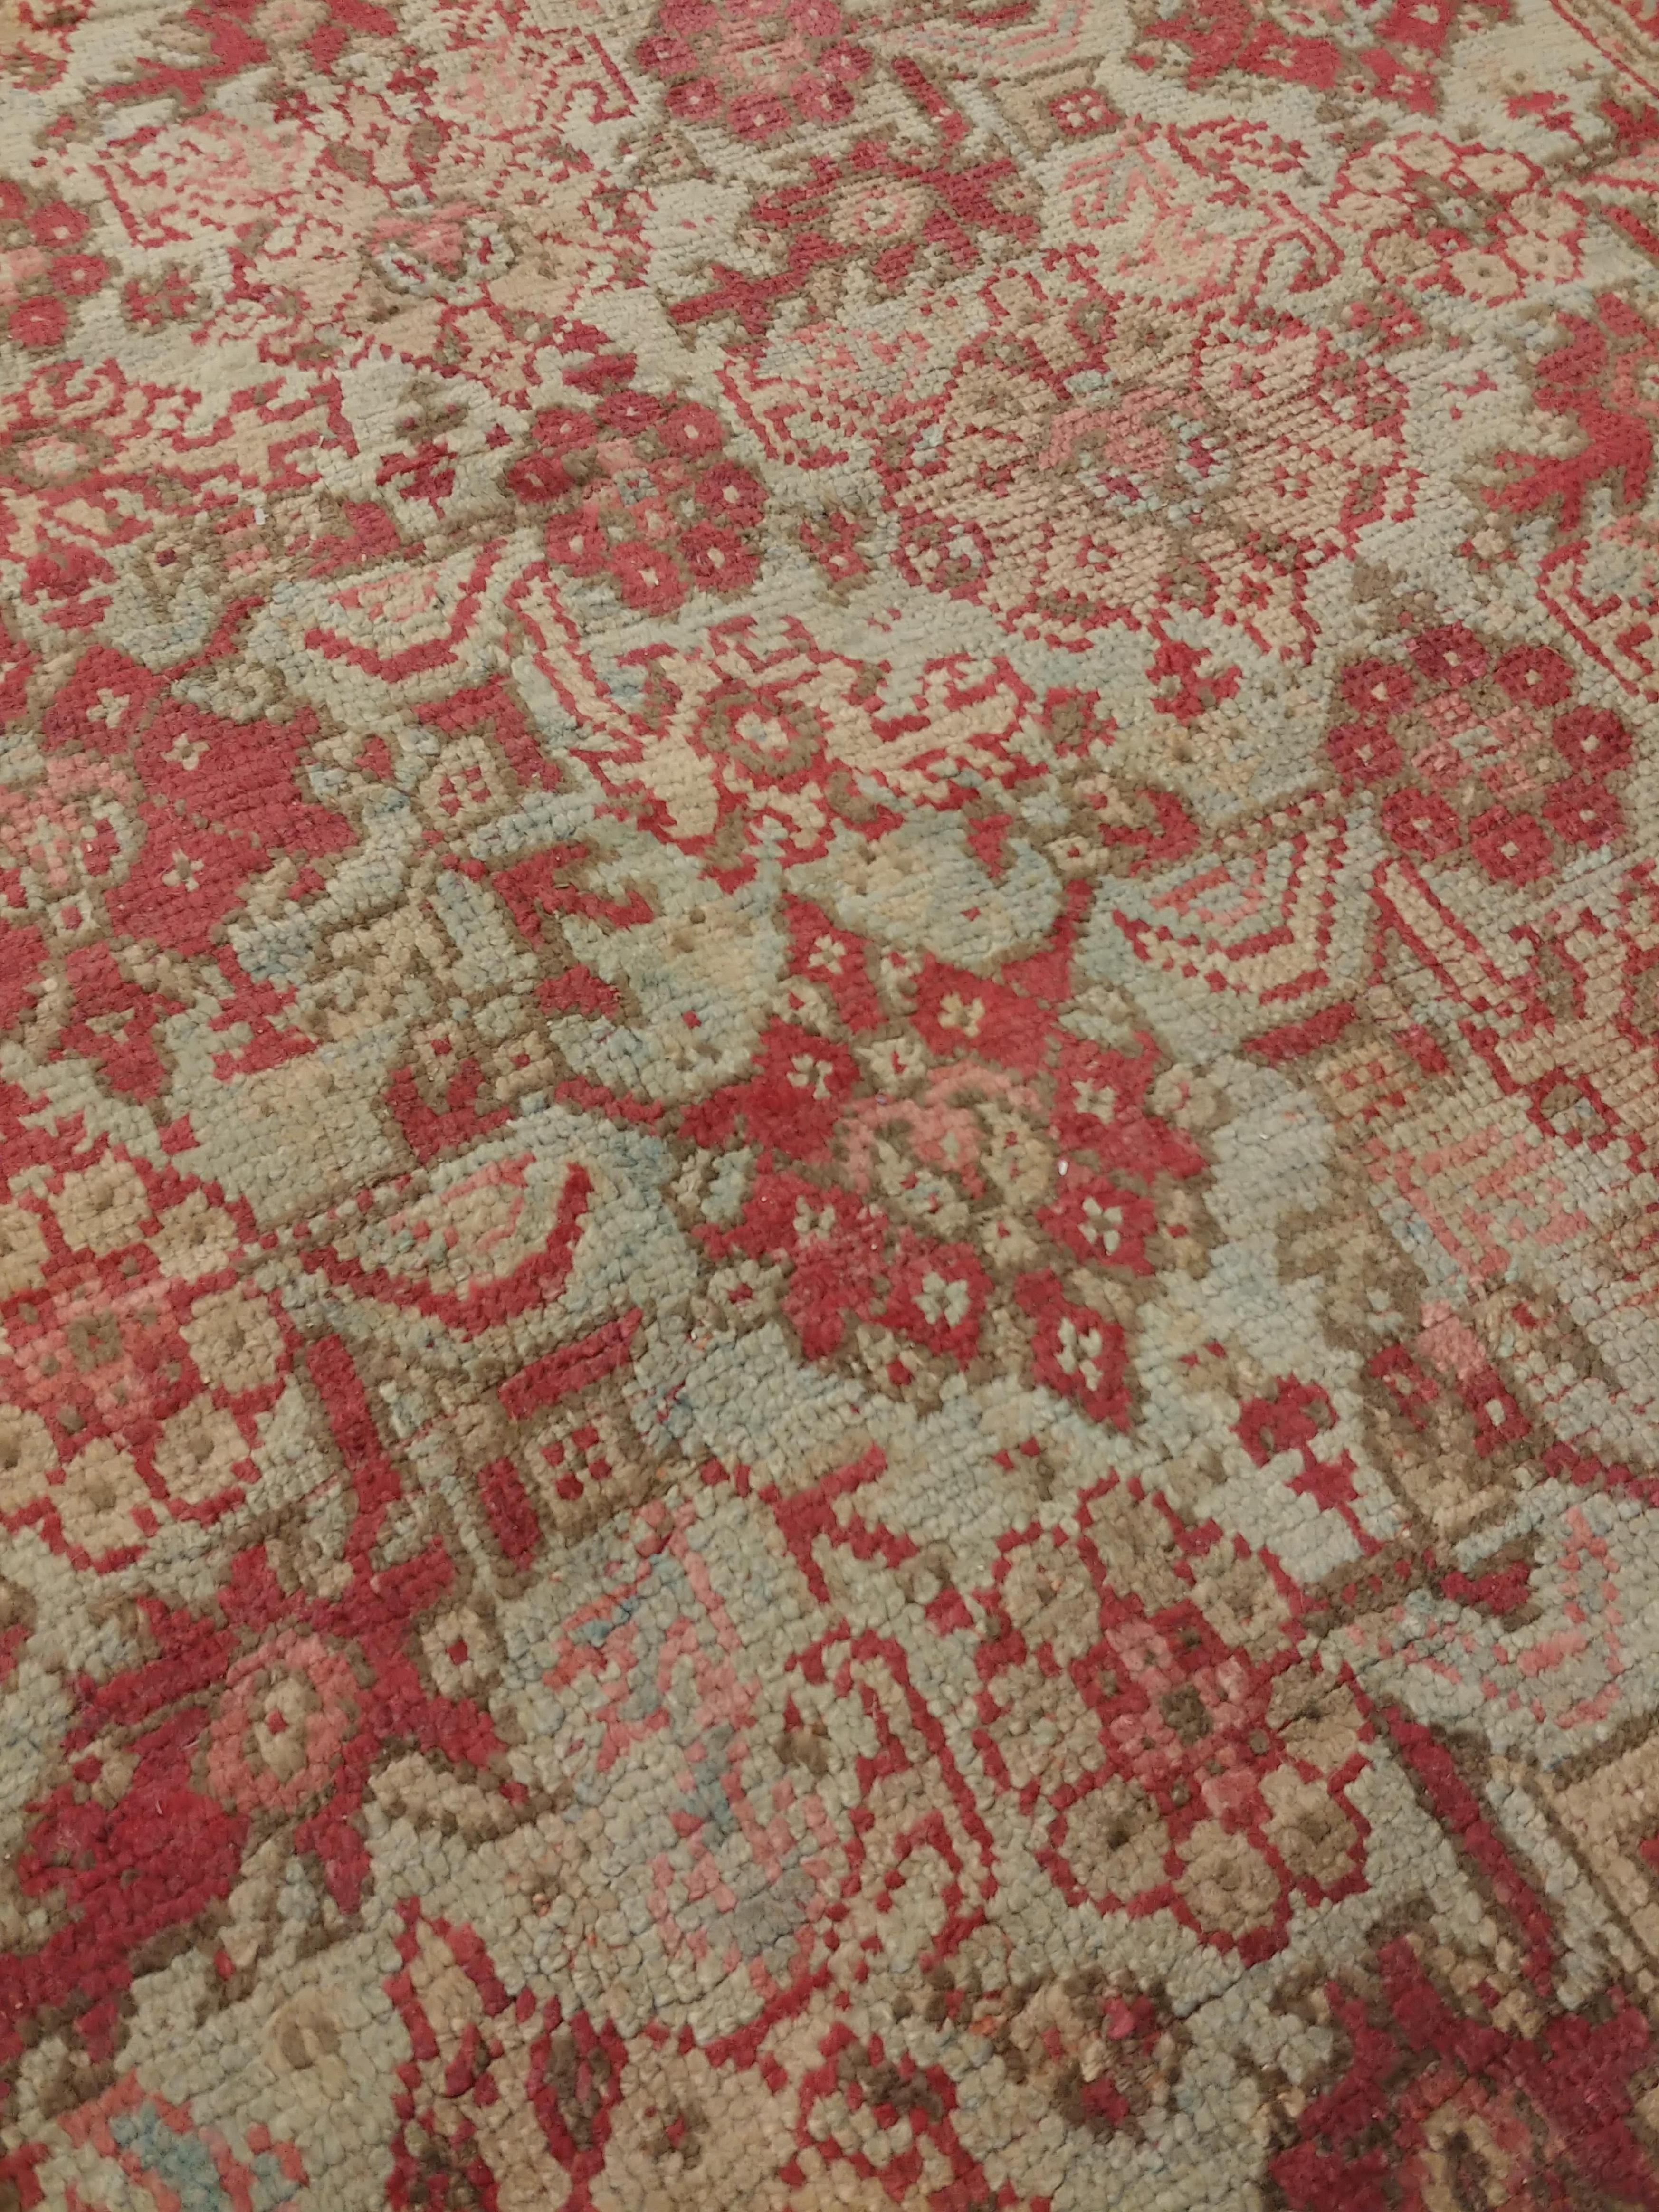 Antique Oushak Carpet, Handmade Oriental Rug, Pale Light Blue, Coral, Raspberry For Sale 4